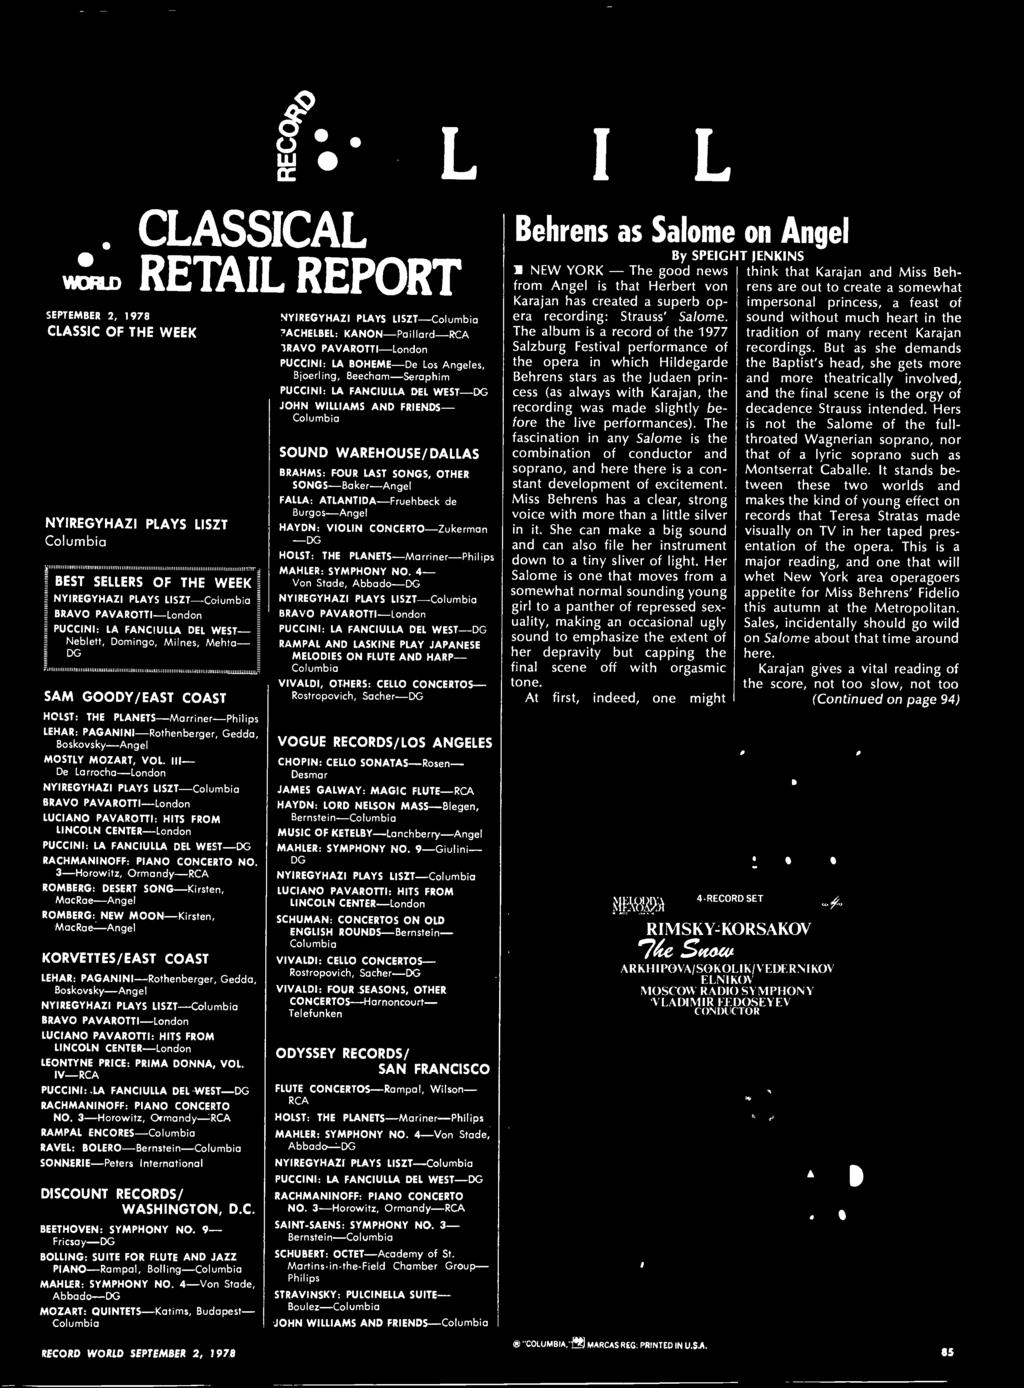 OTHERS: CELLO CONCERTOS- Rostropovich, Sacher-DG VOGUE RECORDS/LOS ANGELES CHOPIN: CELLO SONATAS-Rosen- Desmar JAMES GALWAY: MAGIC FLUTE-RCA HAYDN: LORD NELSON MASS-Blegen, Bernstein-Columbia MUSIC